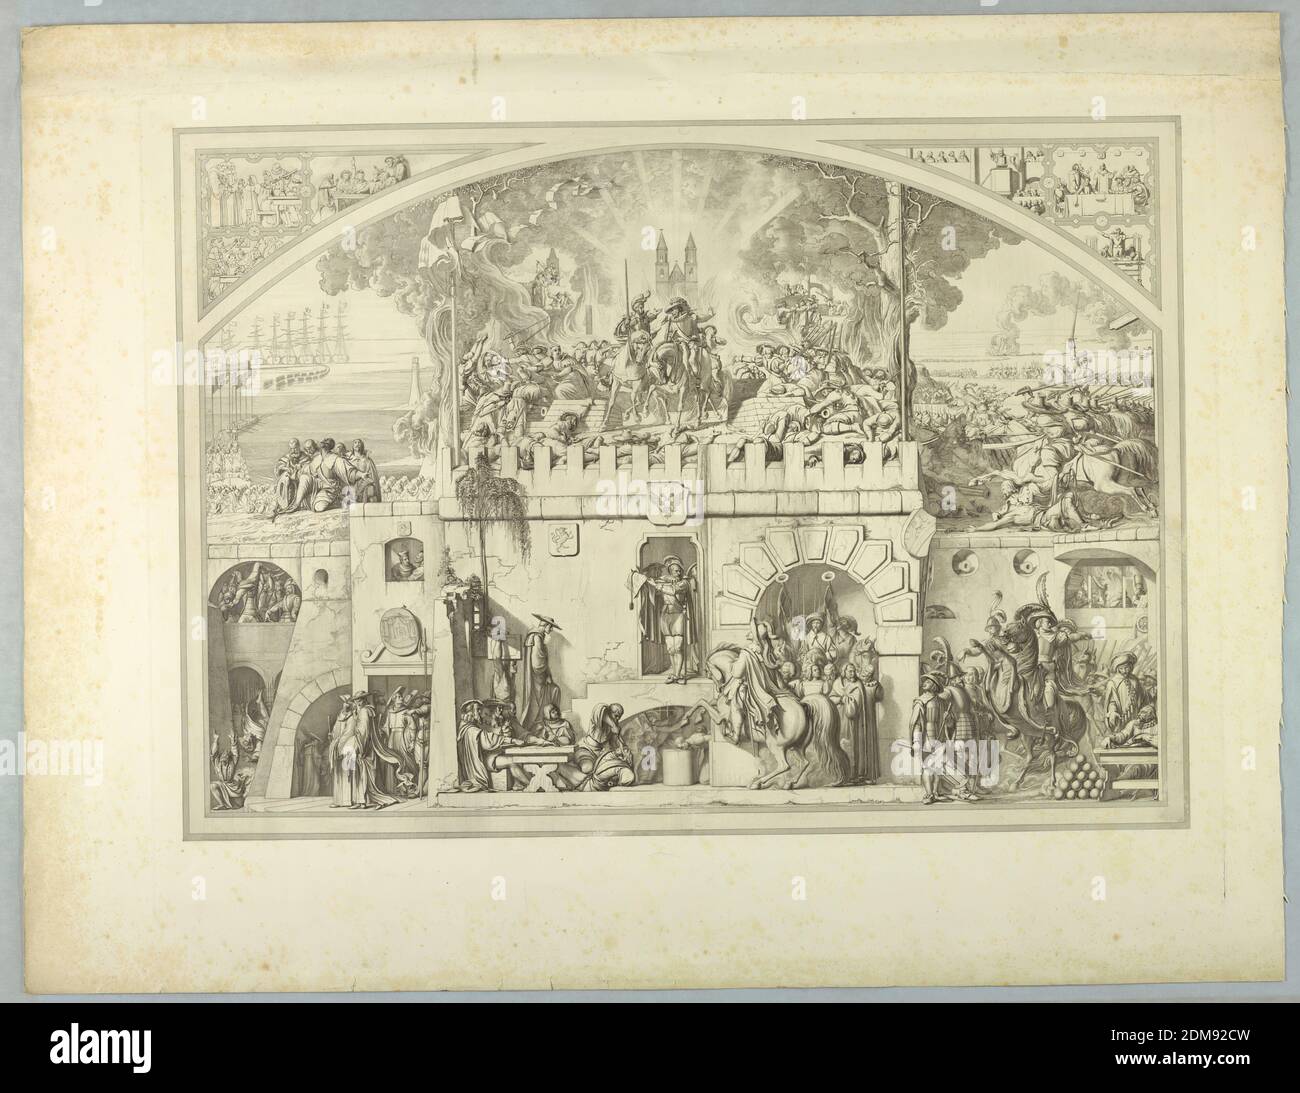 Historical Subject With Battles, Julius Caesar Thaeter, German, 1804 - 1870, Engraving on paper, Europe, Print Stock Photo